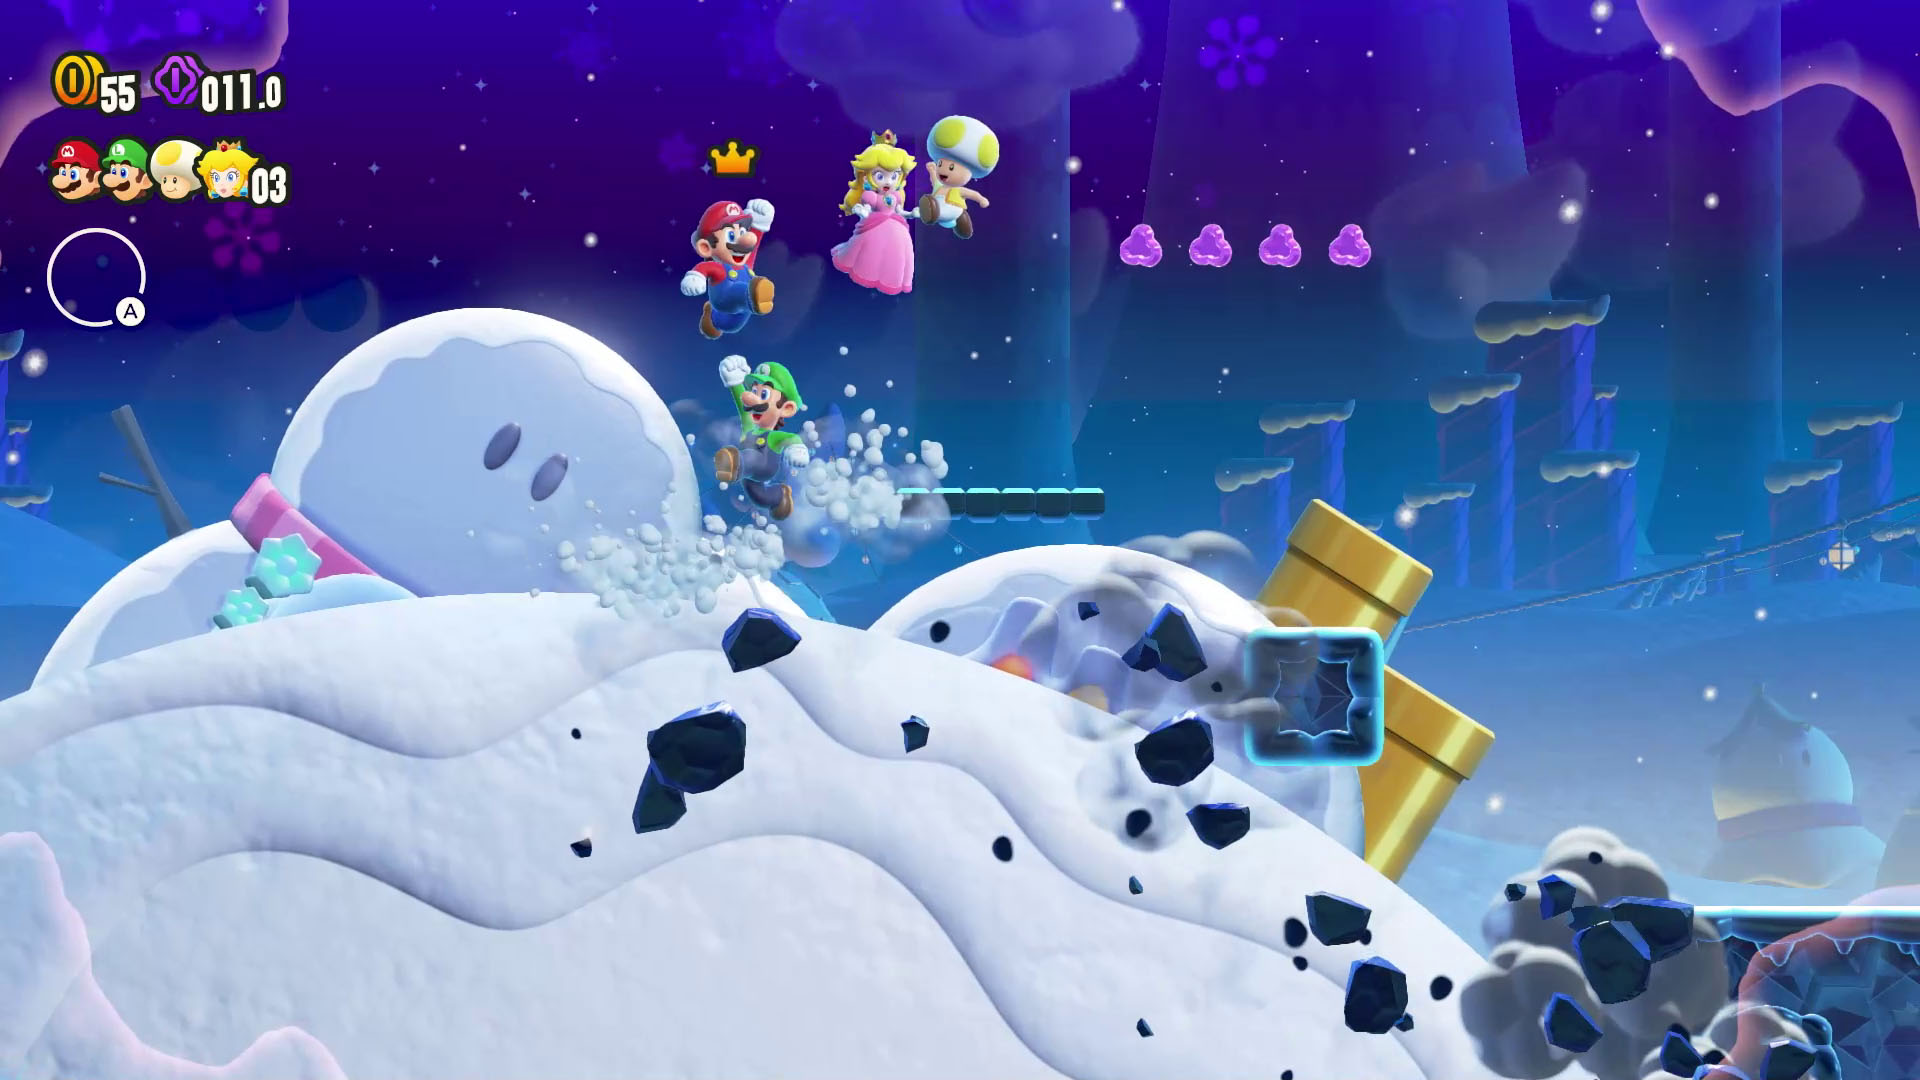 Gallery: Nintendo releases 33 Super Mario Bros Wonder screenshots